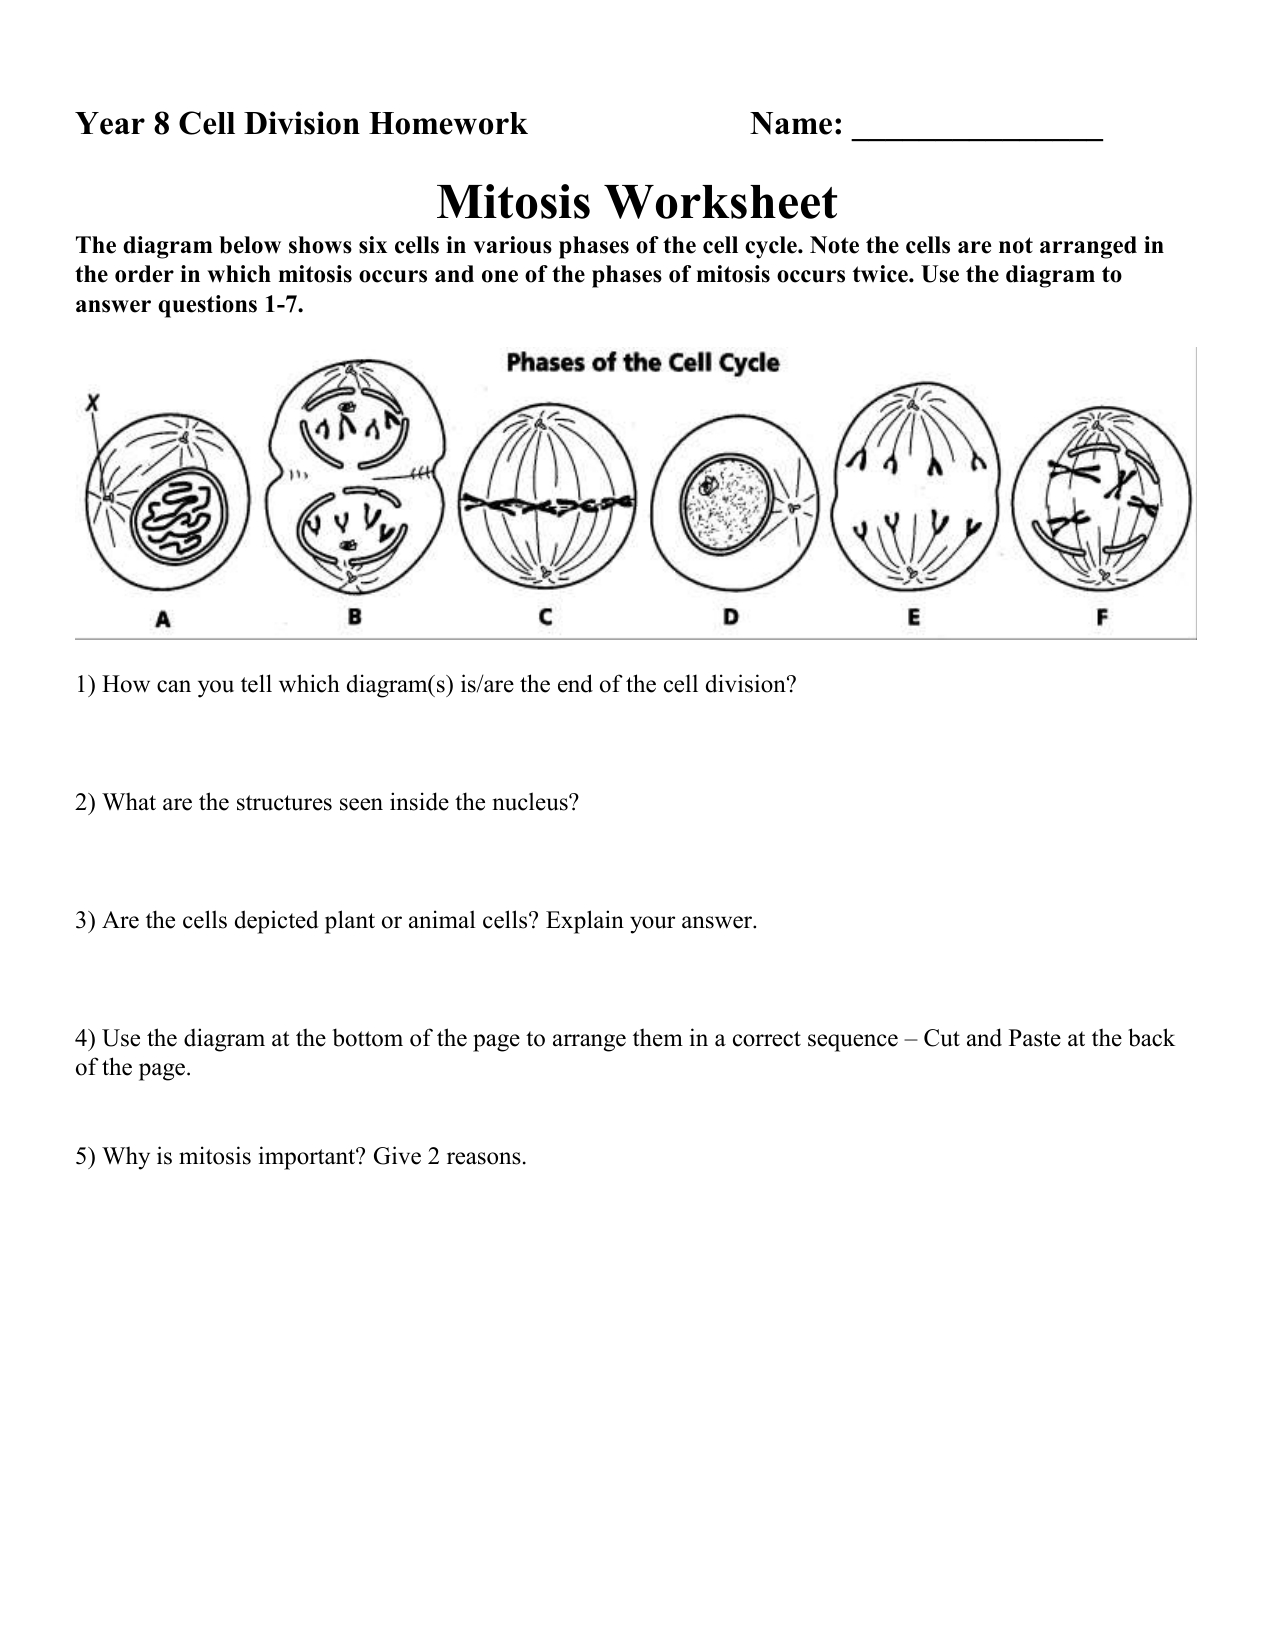 Mitosis Worksheet With Regard To Mitosis Worksheet Answers